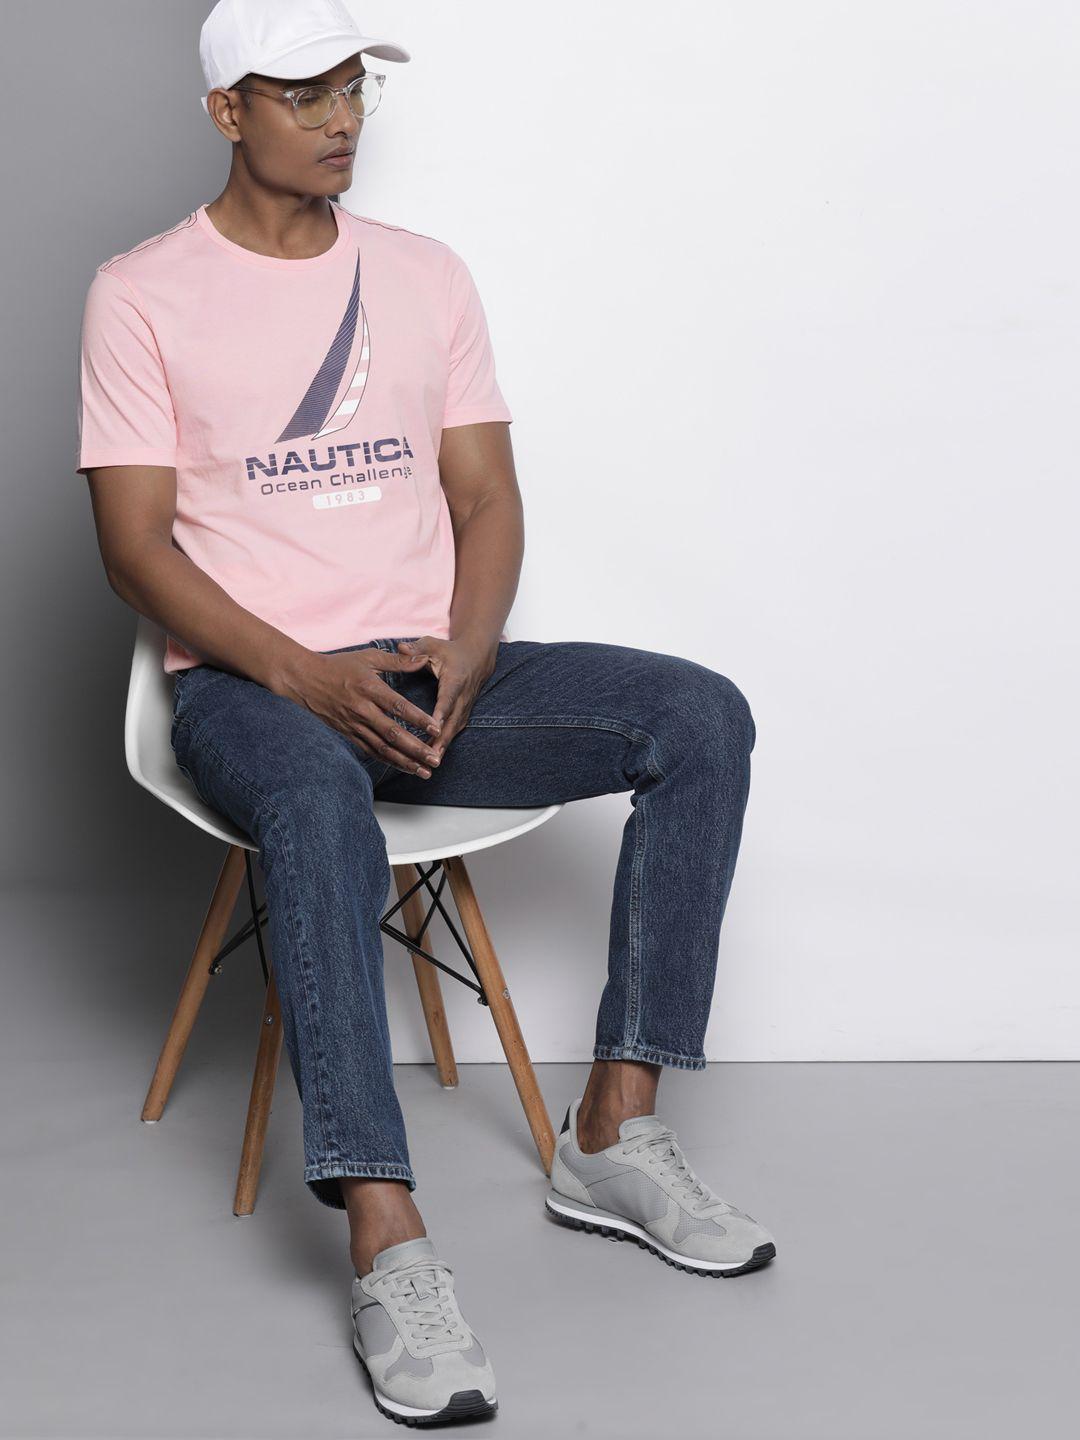 nautica brand logo printed pure cotton t-shirt